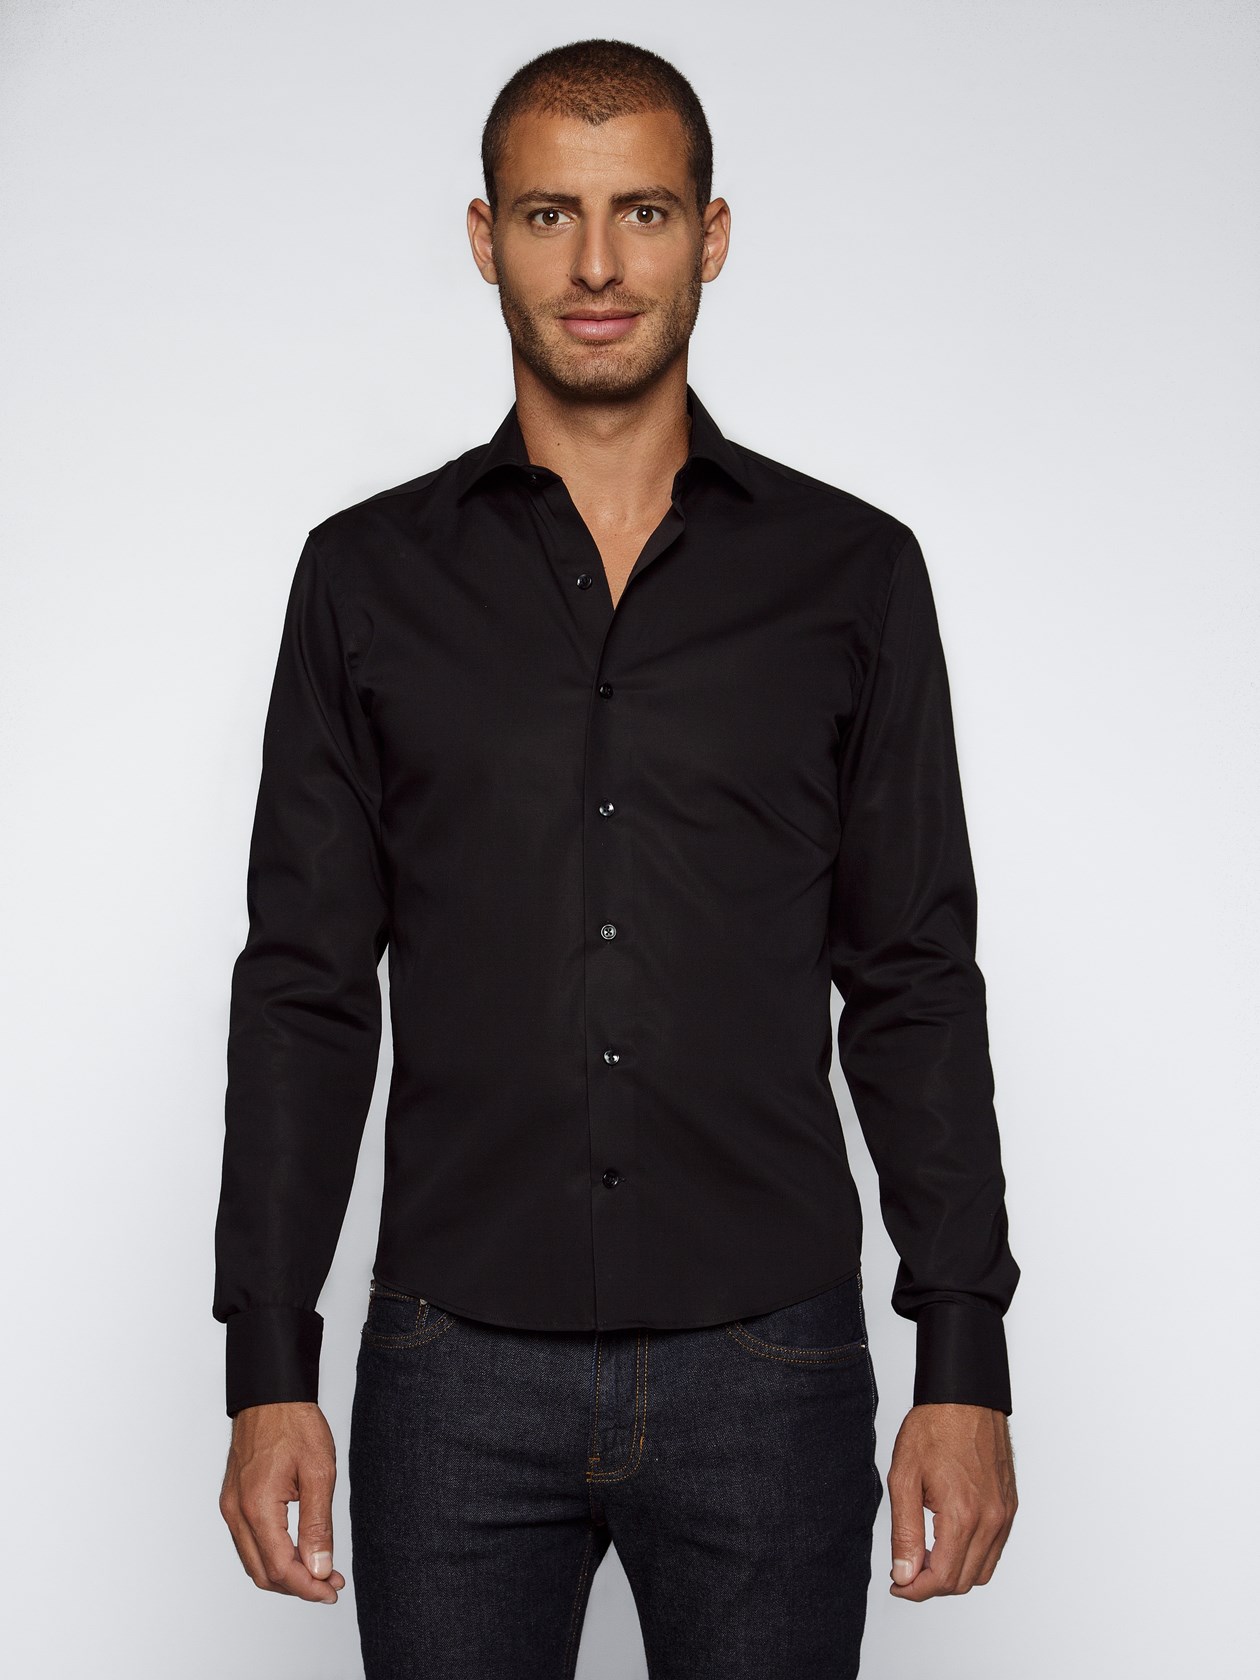 Pima Katoen - Zwart, Plain Weave Overhemd